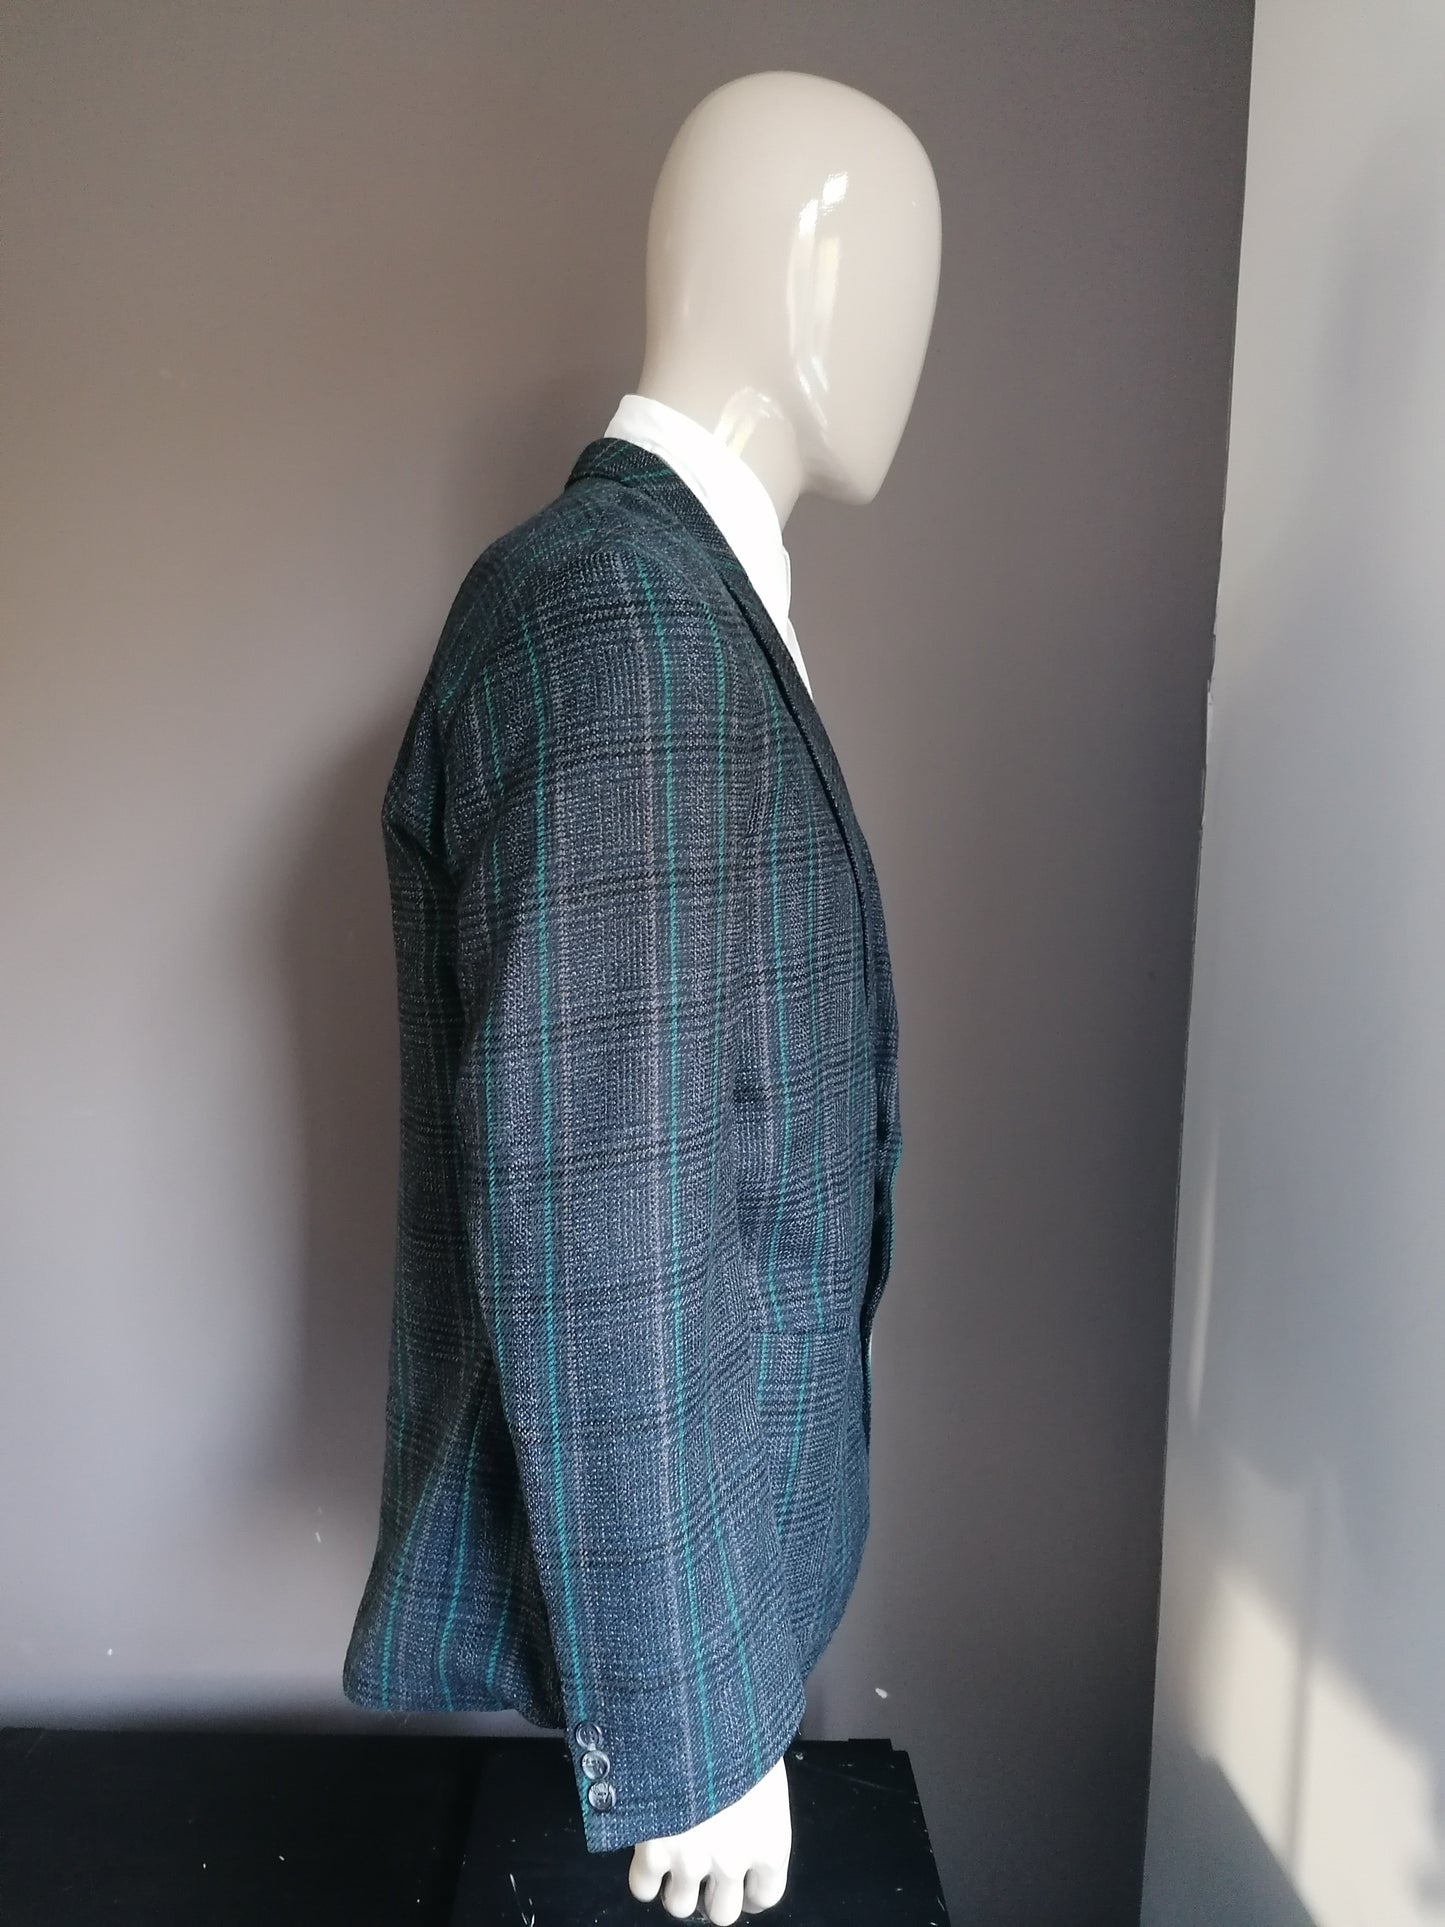 Vintage woolen tweed jacket. Green gray black checkered. Size XL